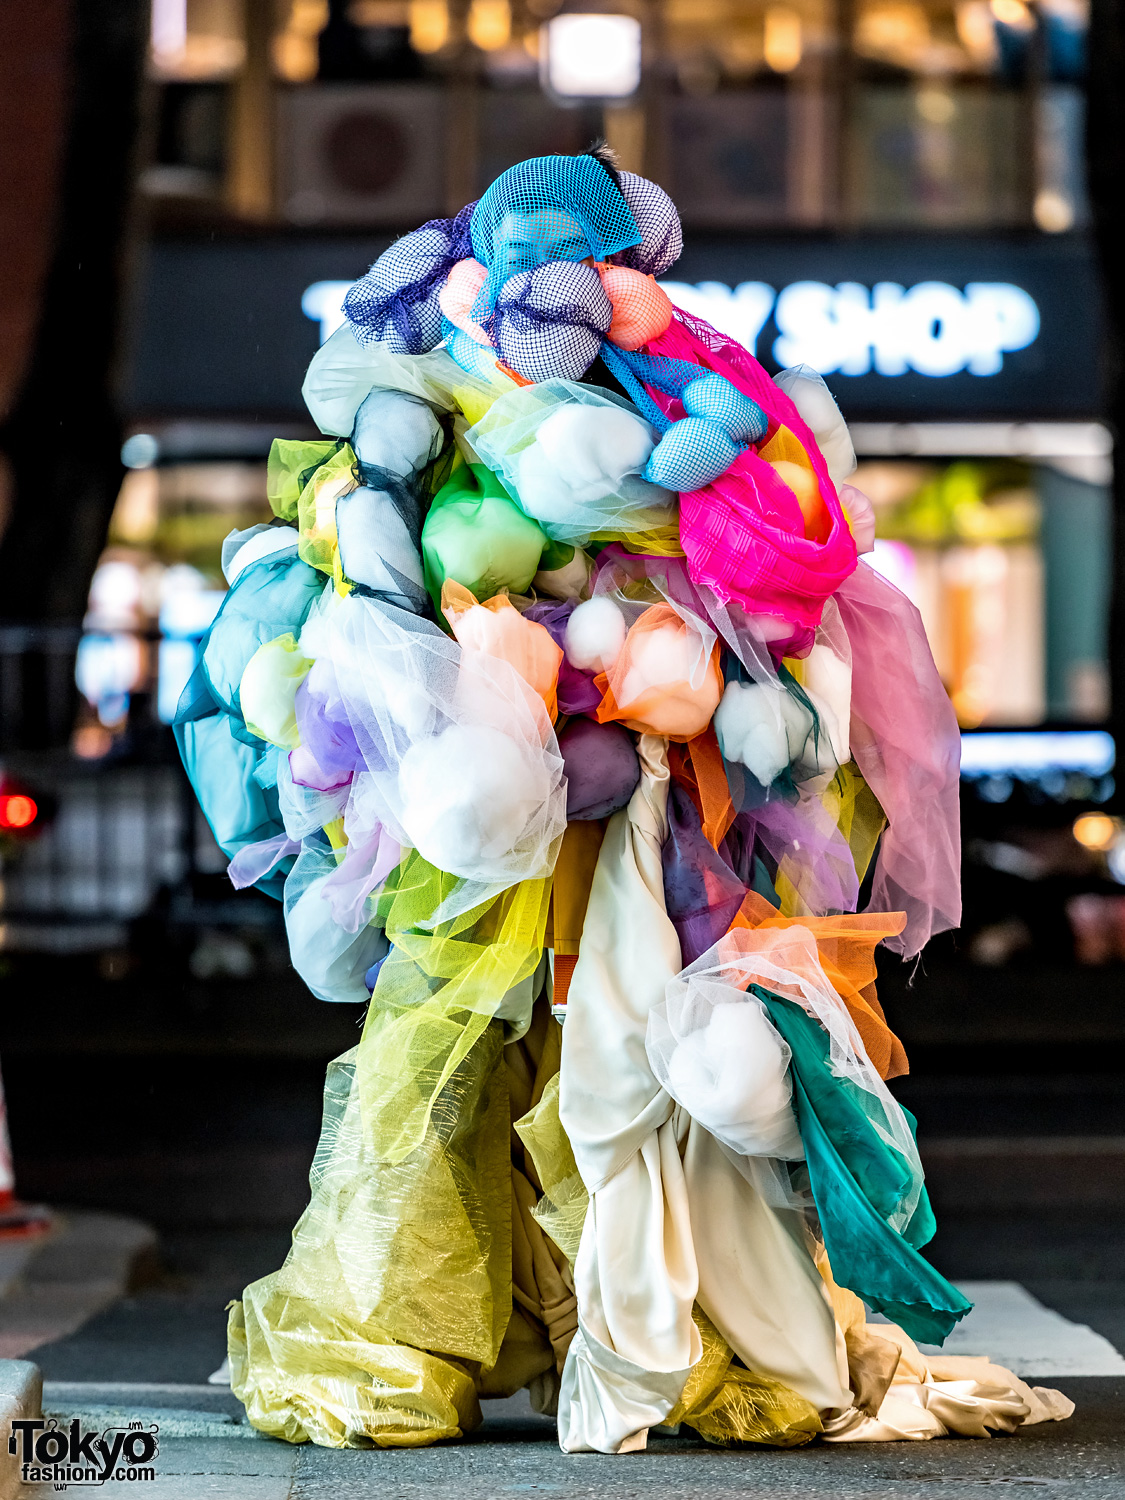 Avantgarde Handmade Harajuku Street Style Featuring Colorful Sculptural Fashion